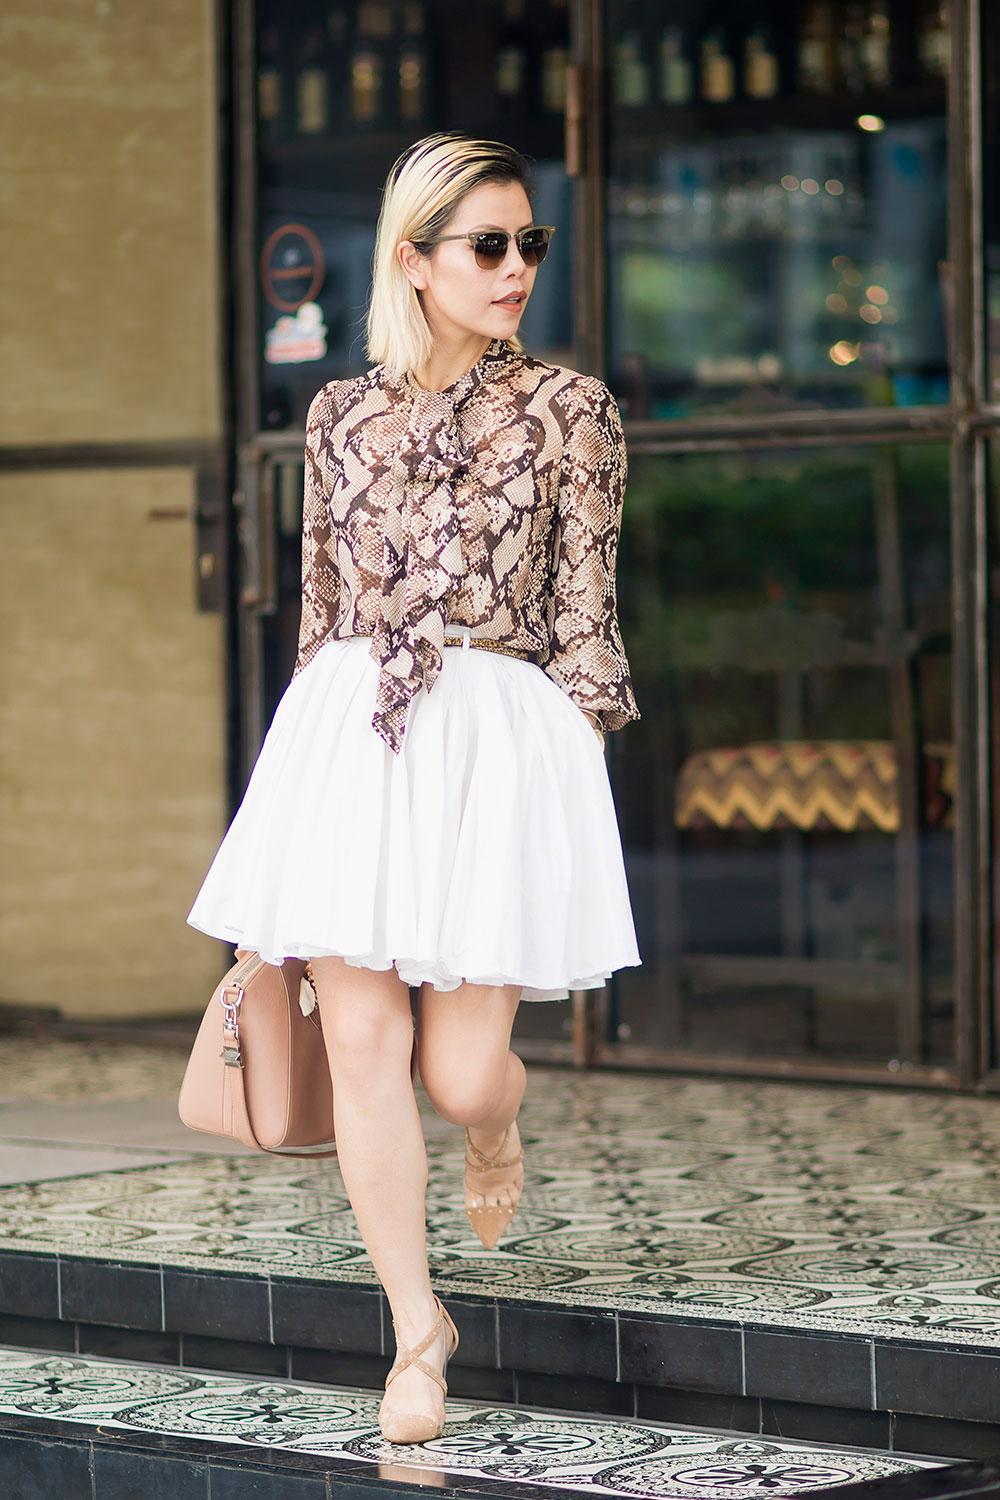 Crystal Phuong- Fashion Blogger- Raye the label shoes, white skirt & snake skin blouse